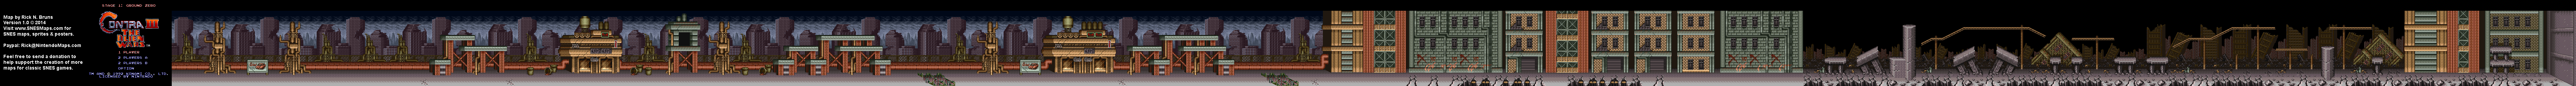 Contra 3: The Alien Wars - Stagel 1 Ground Zero - Super Nintendo SNES Map BG